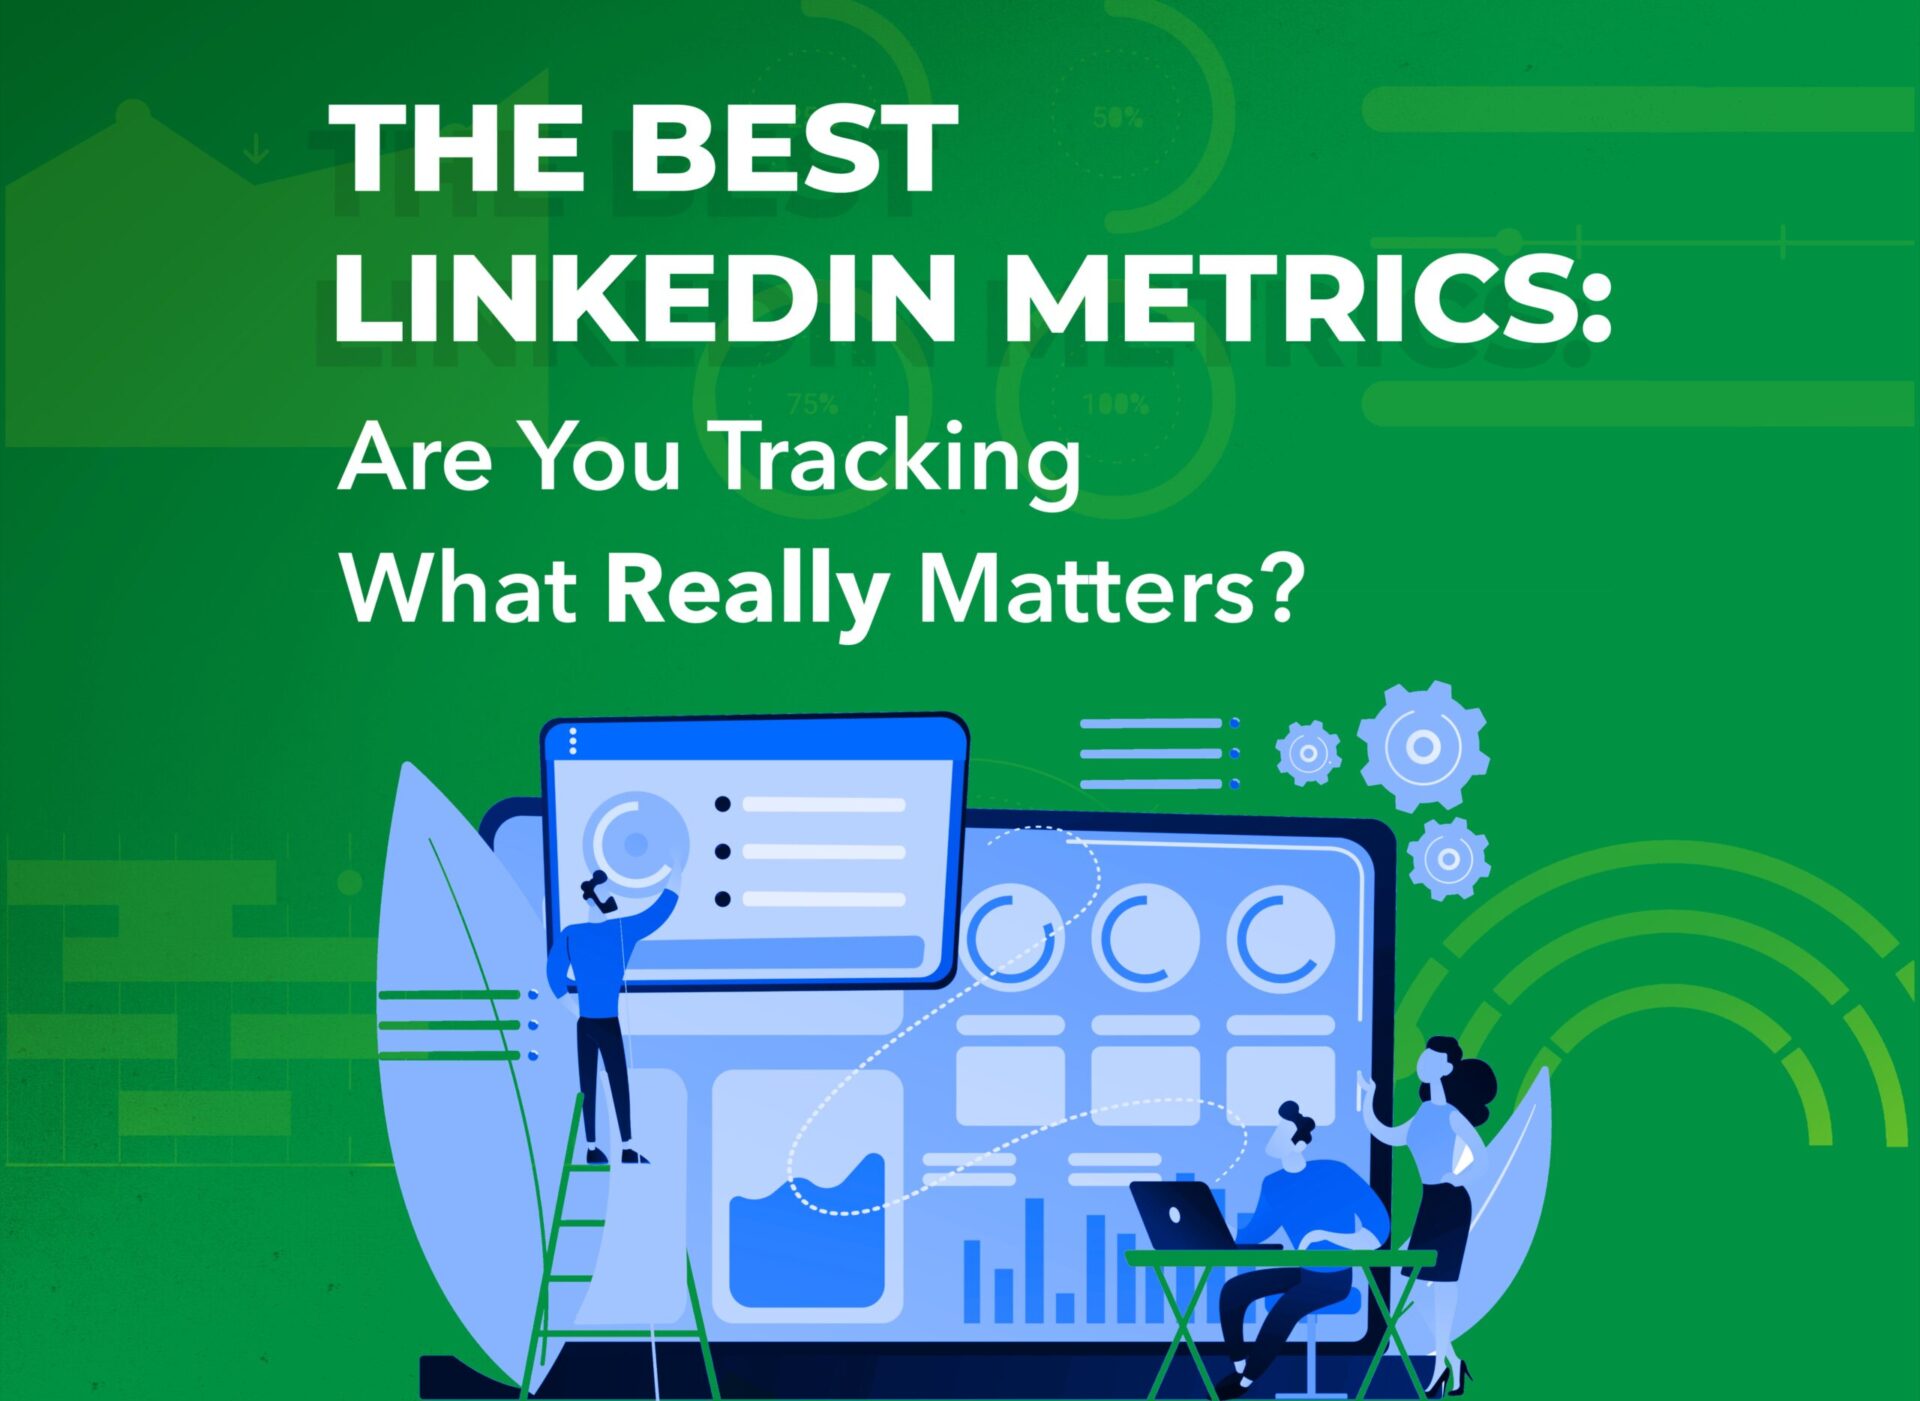 Show Me the Metrics! What Should You Measure on LinkedIn?